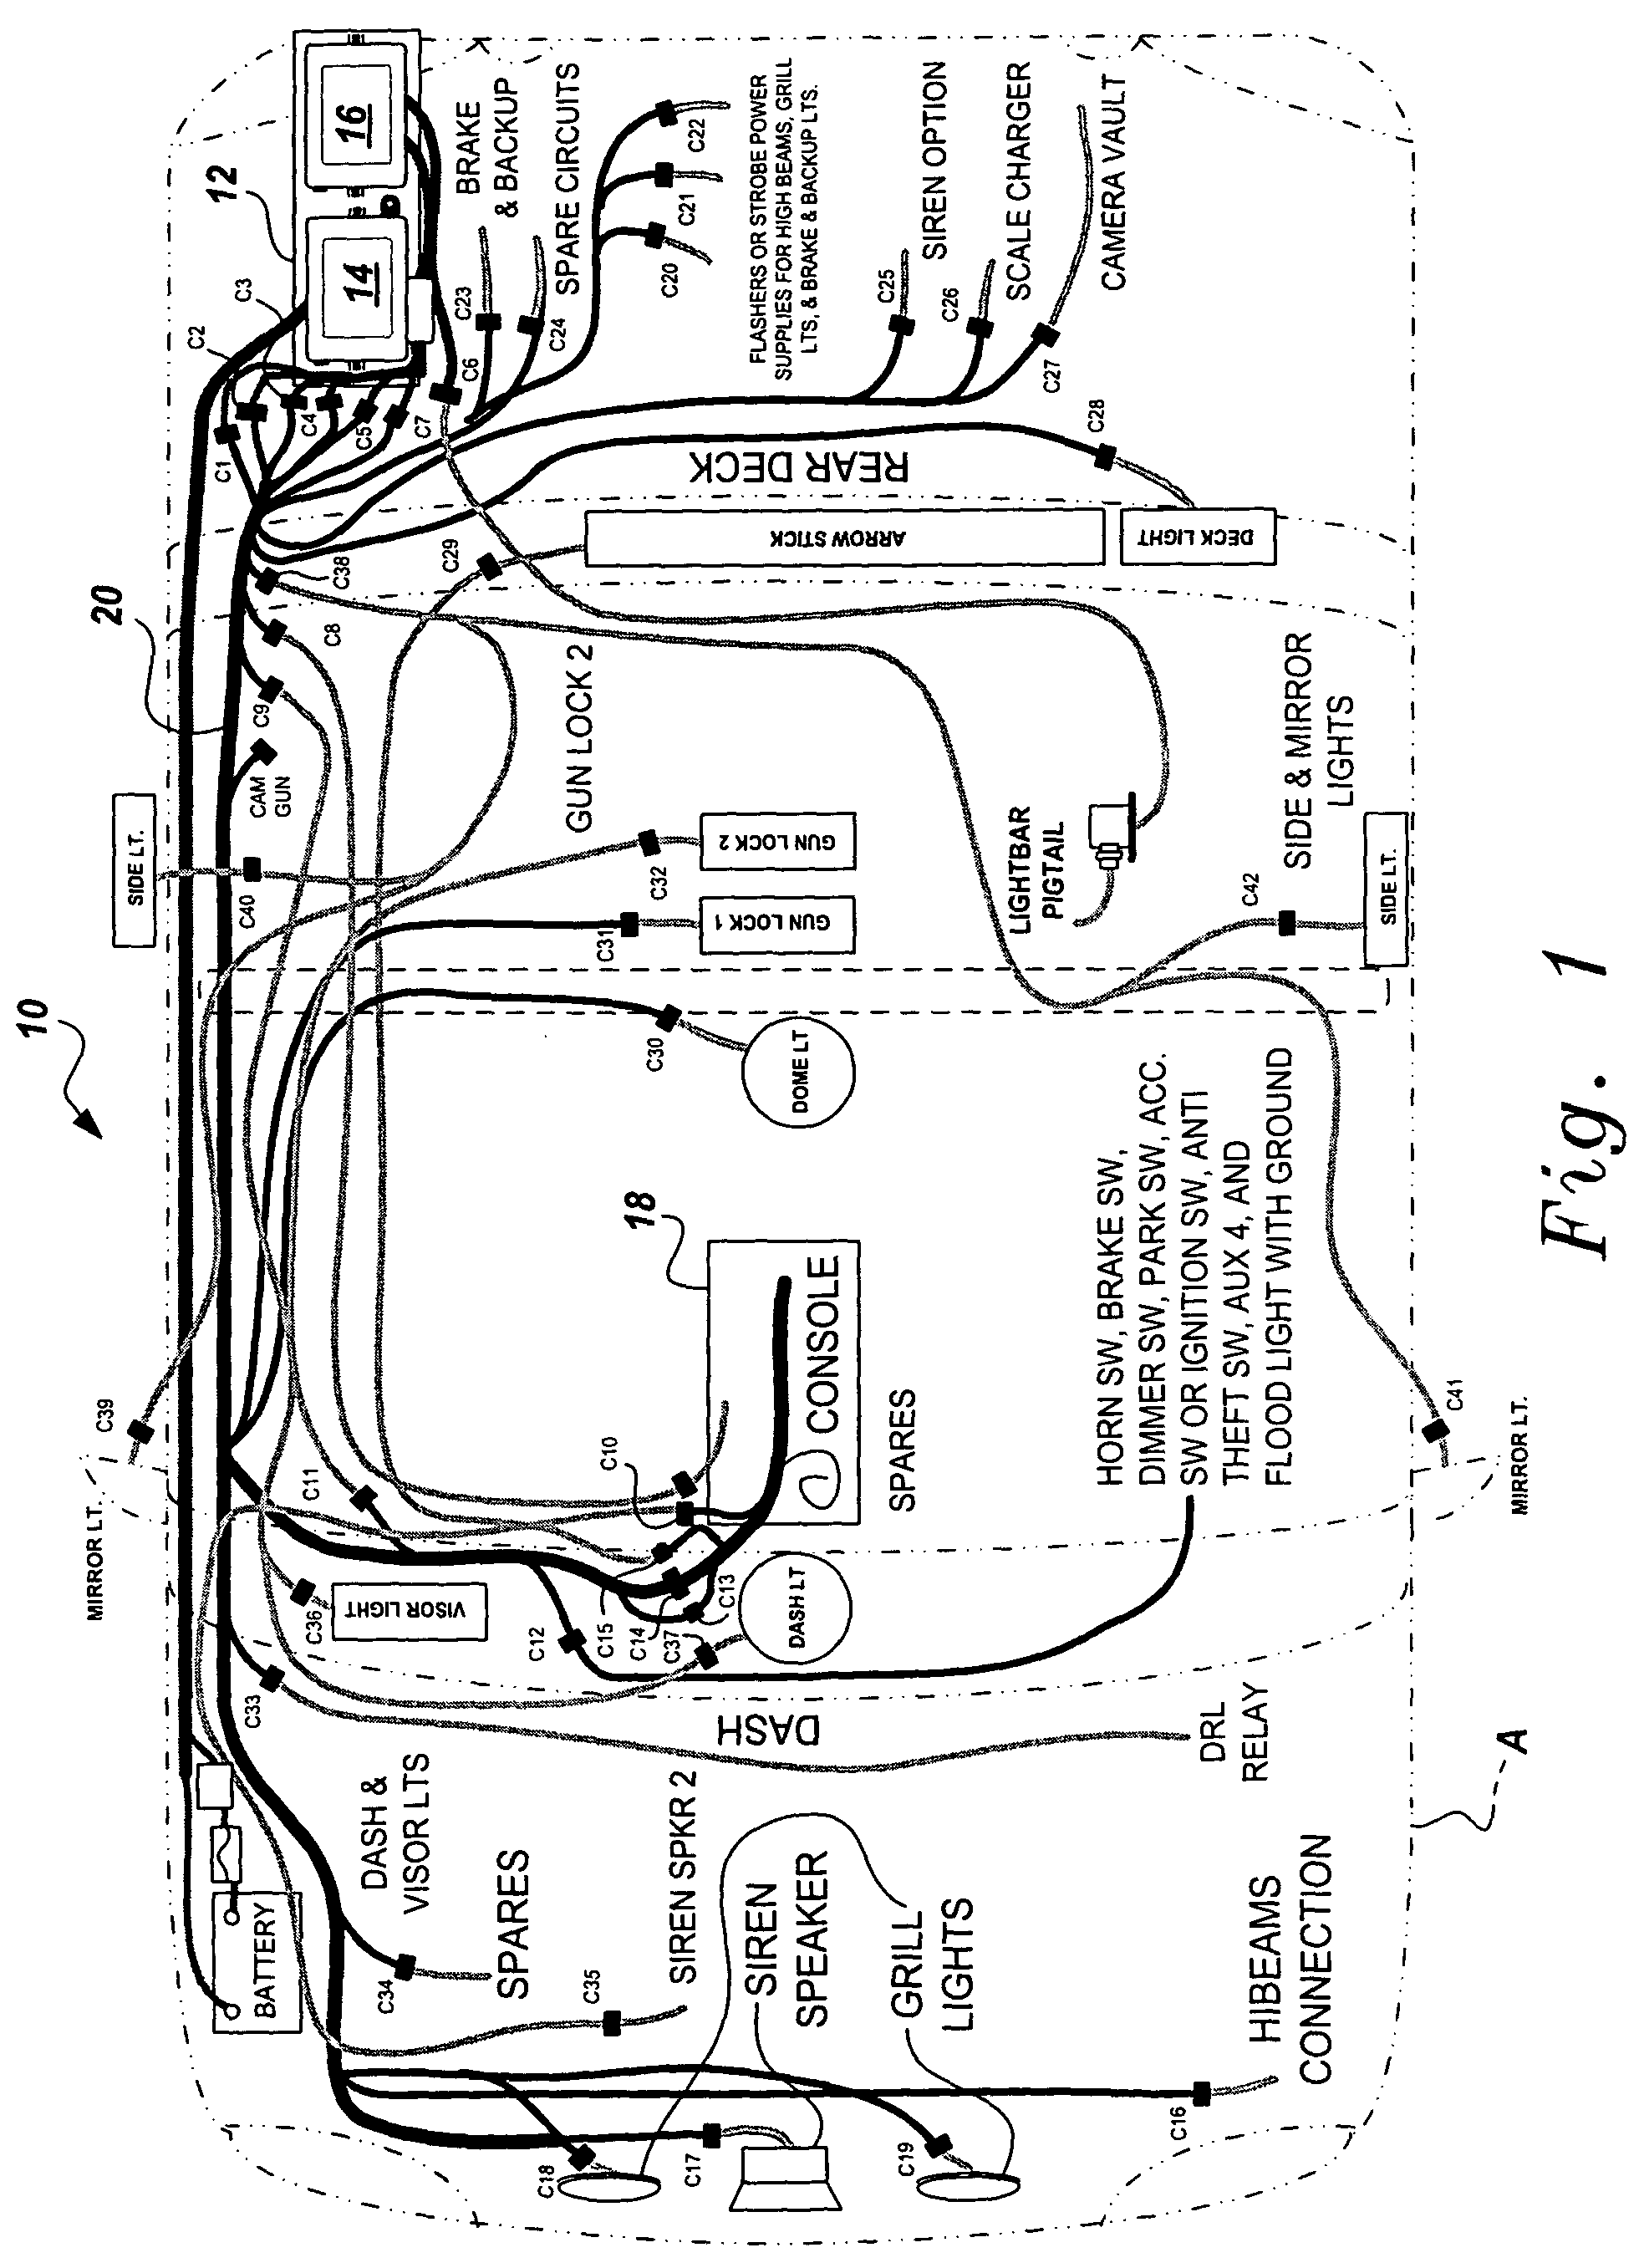 Cat C15 Injector Wiring Diagram